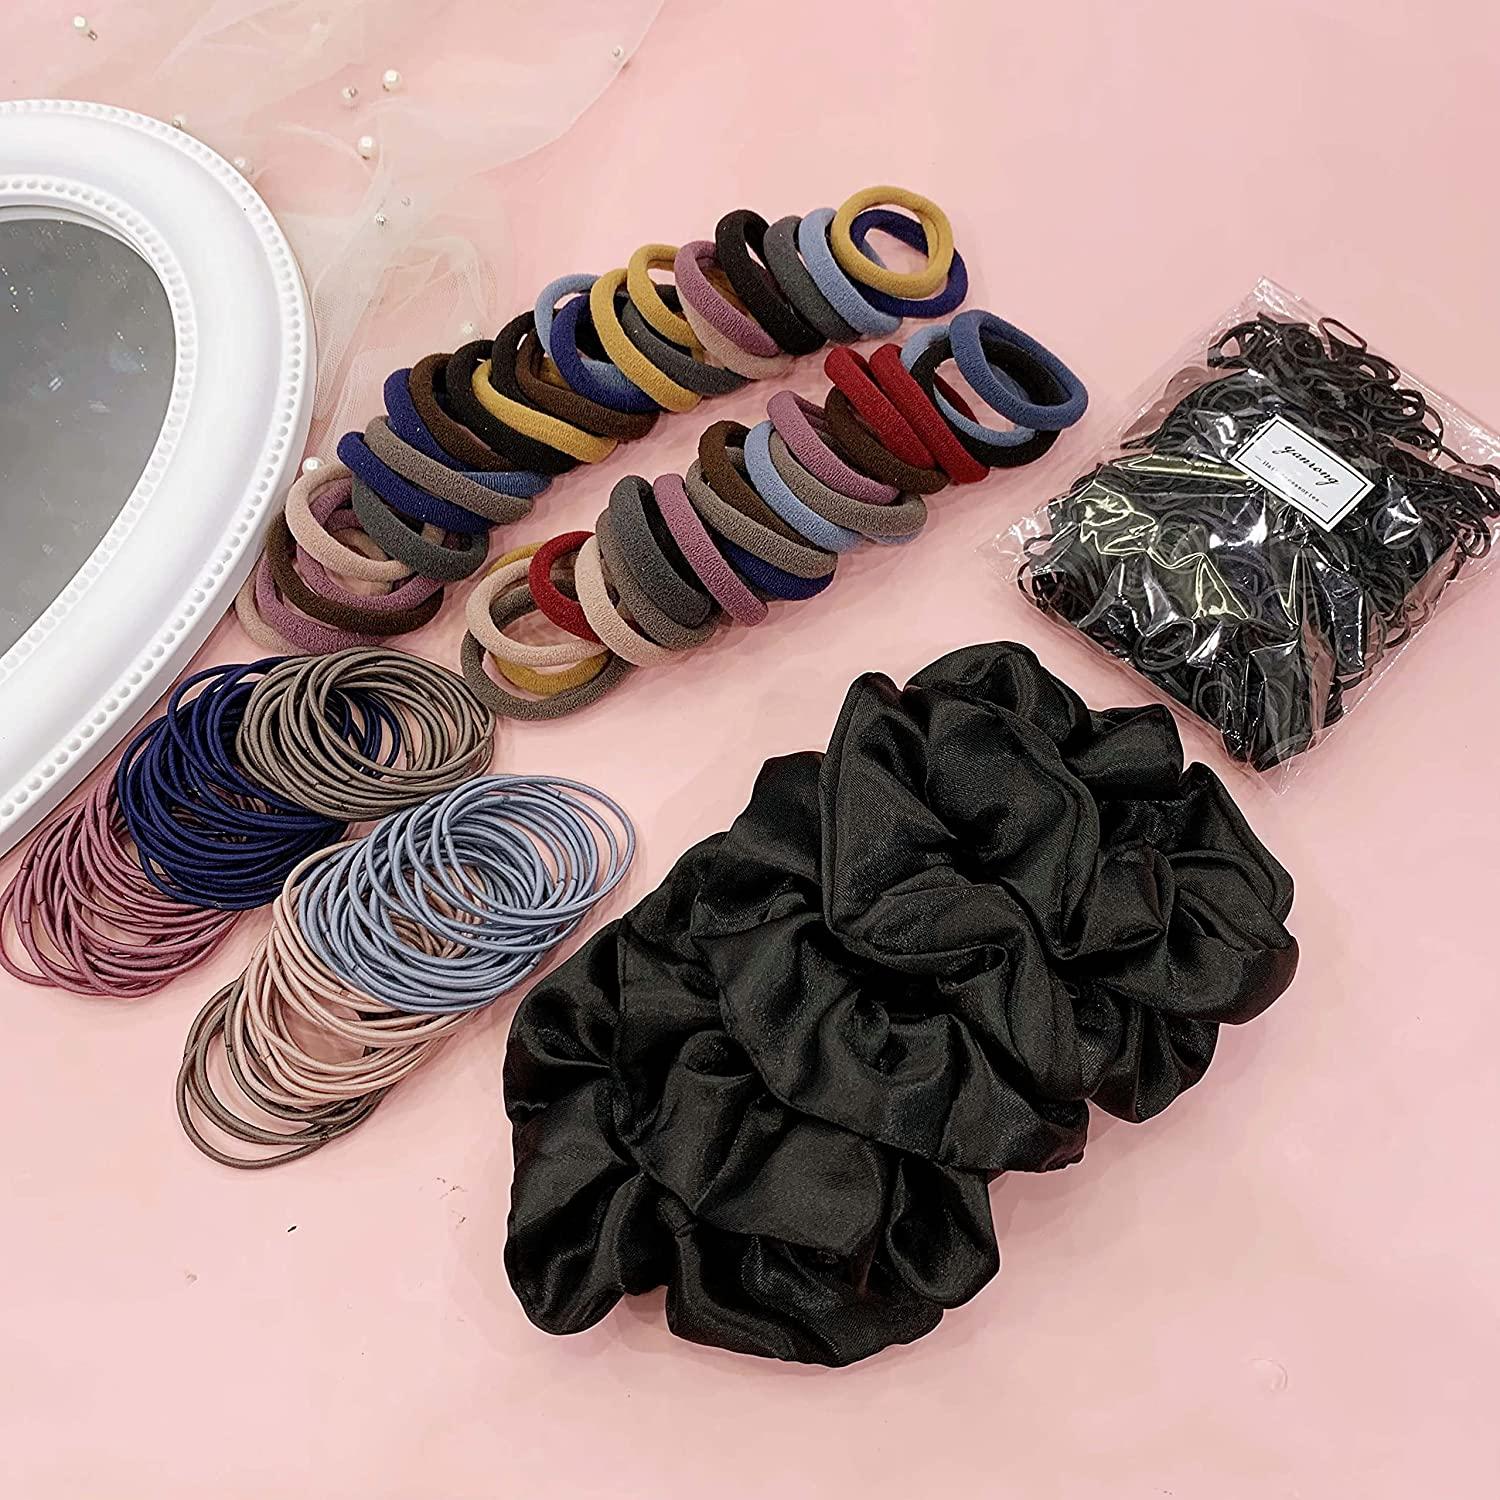 Cheap YANRONG 100pcs Colorful Cotton Soft Elastic Hair Bands Girls